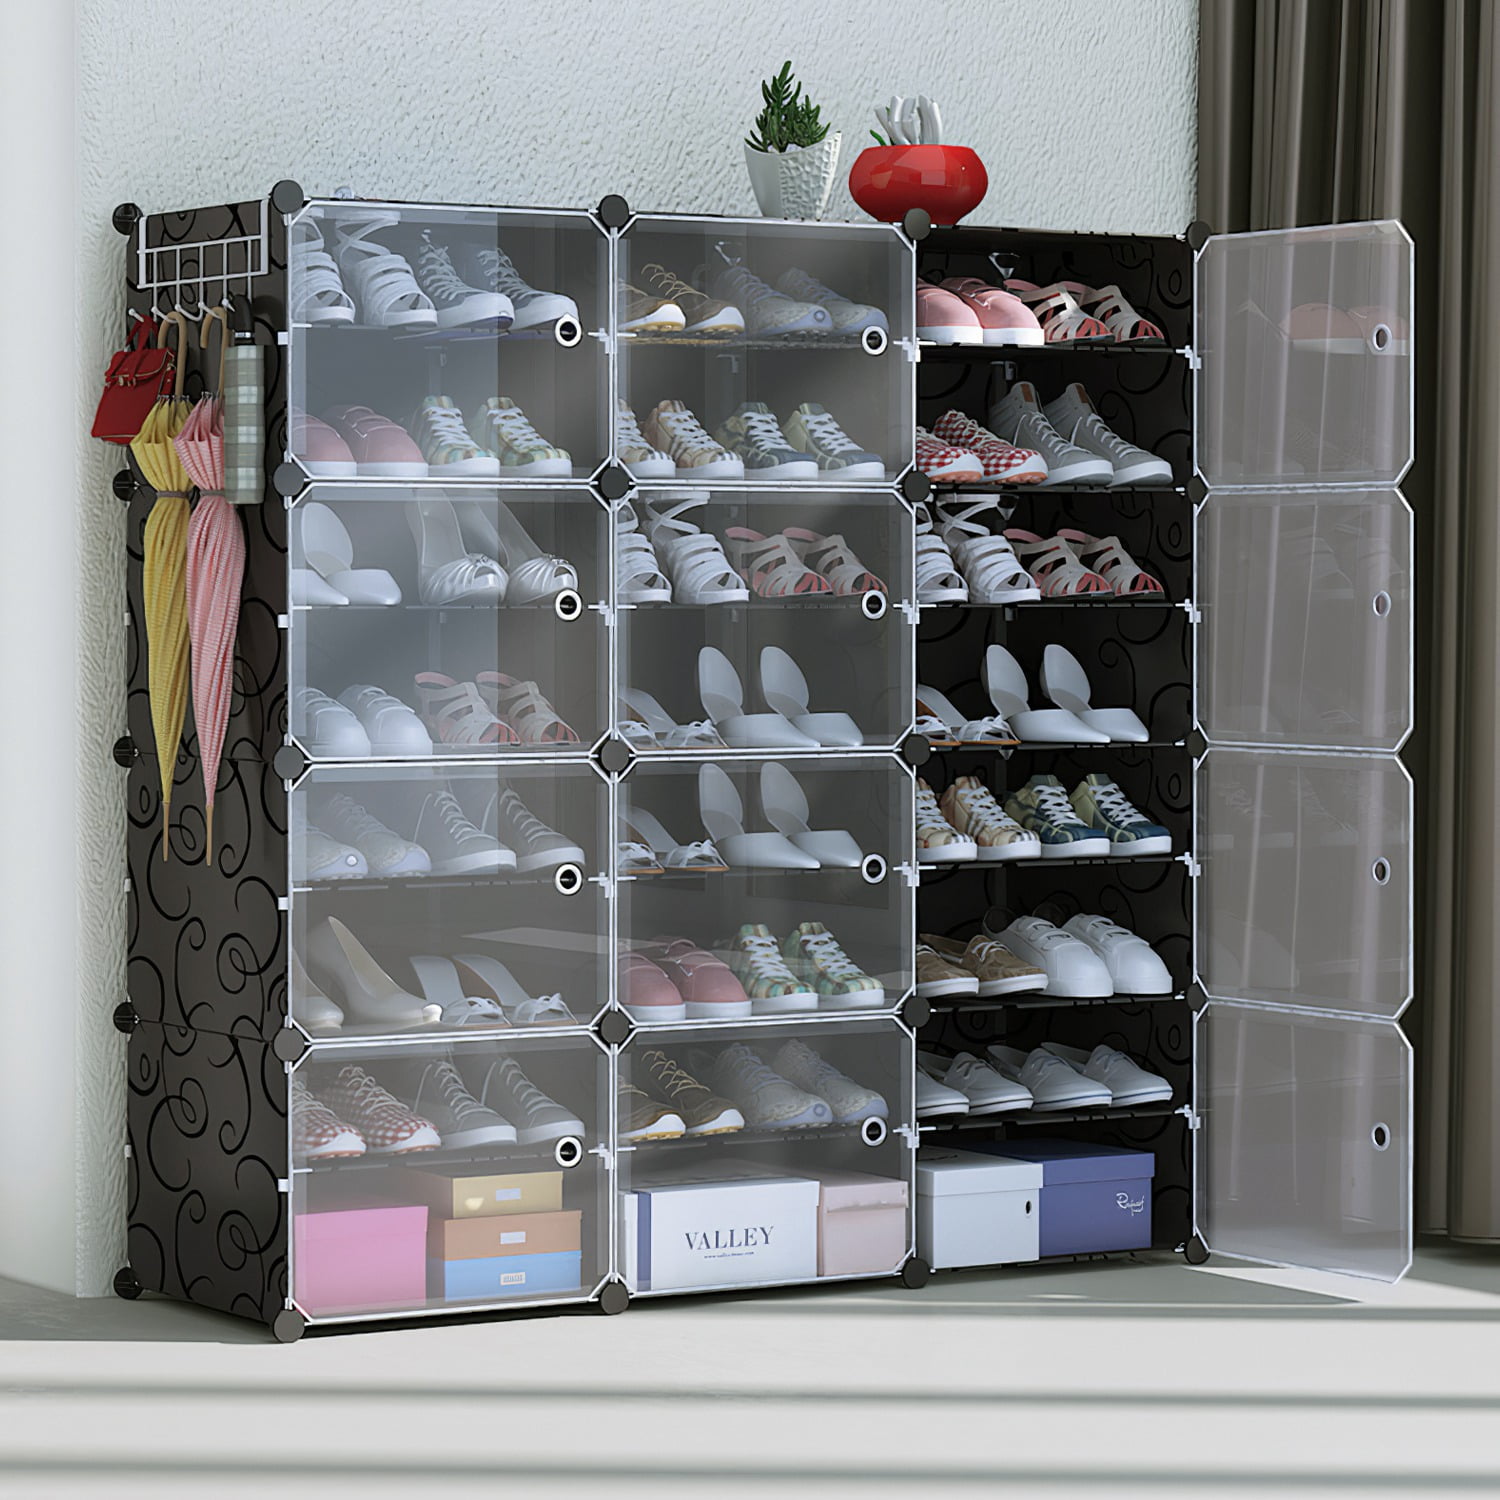 1Easylife Shoe Rack Organizer, 36-44 Pairs Shoe Storage Shelf, 10